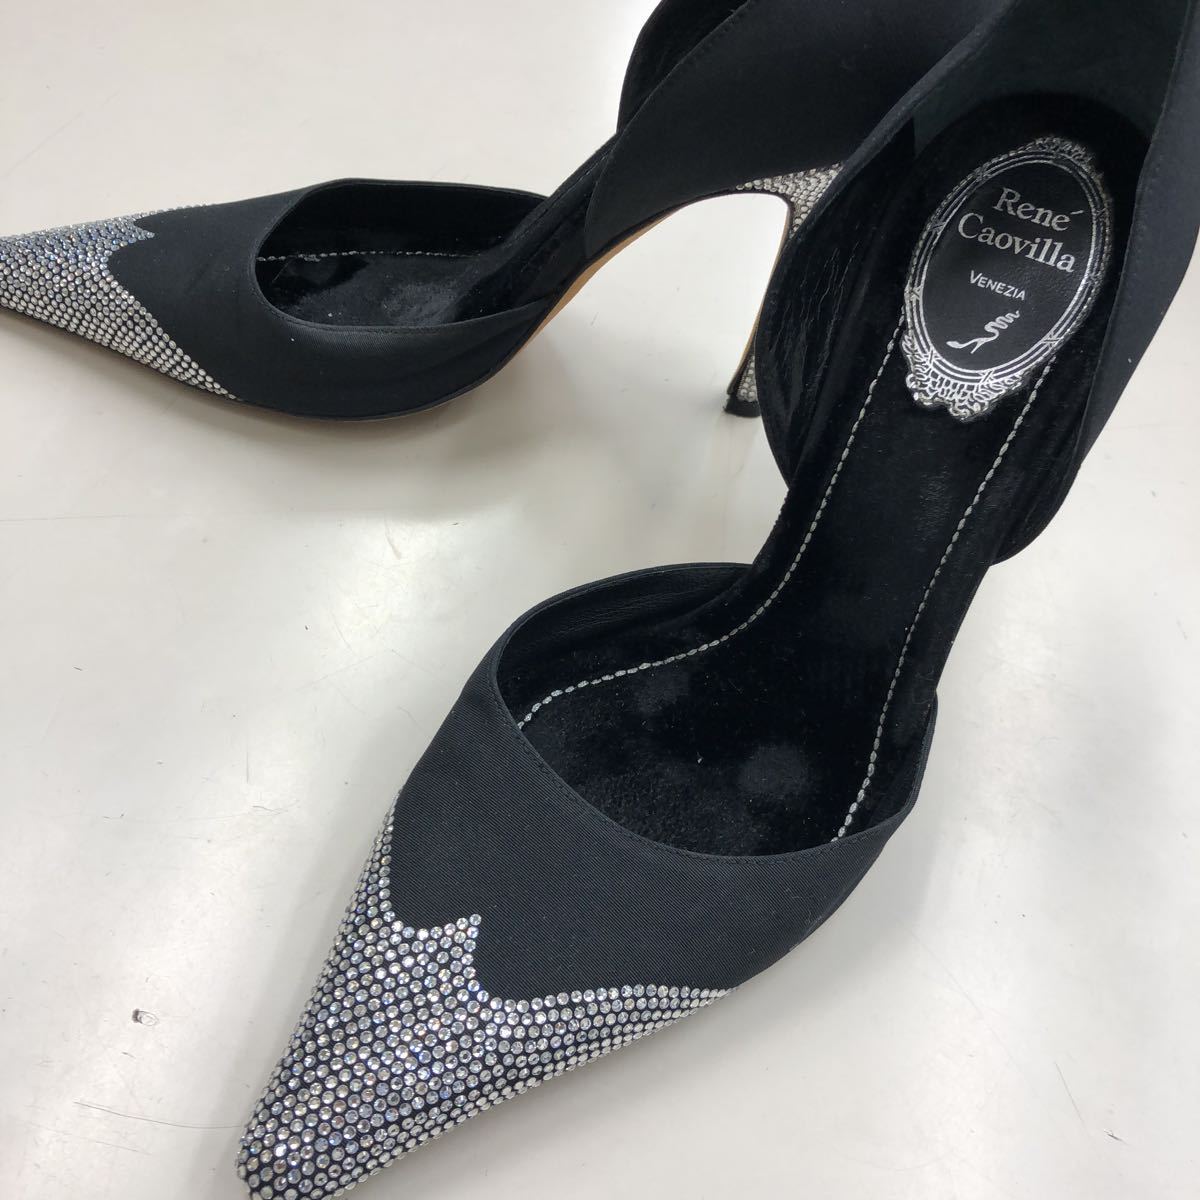  super-beauty goods genuine article [Rene Caovilla VENEZIA] Swarovski high heel black group Italy made size 37 24cm lady's super-discount limitation one point thing 